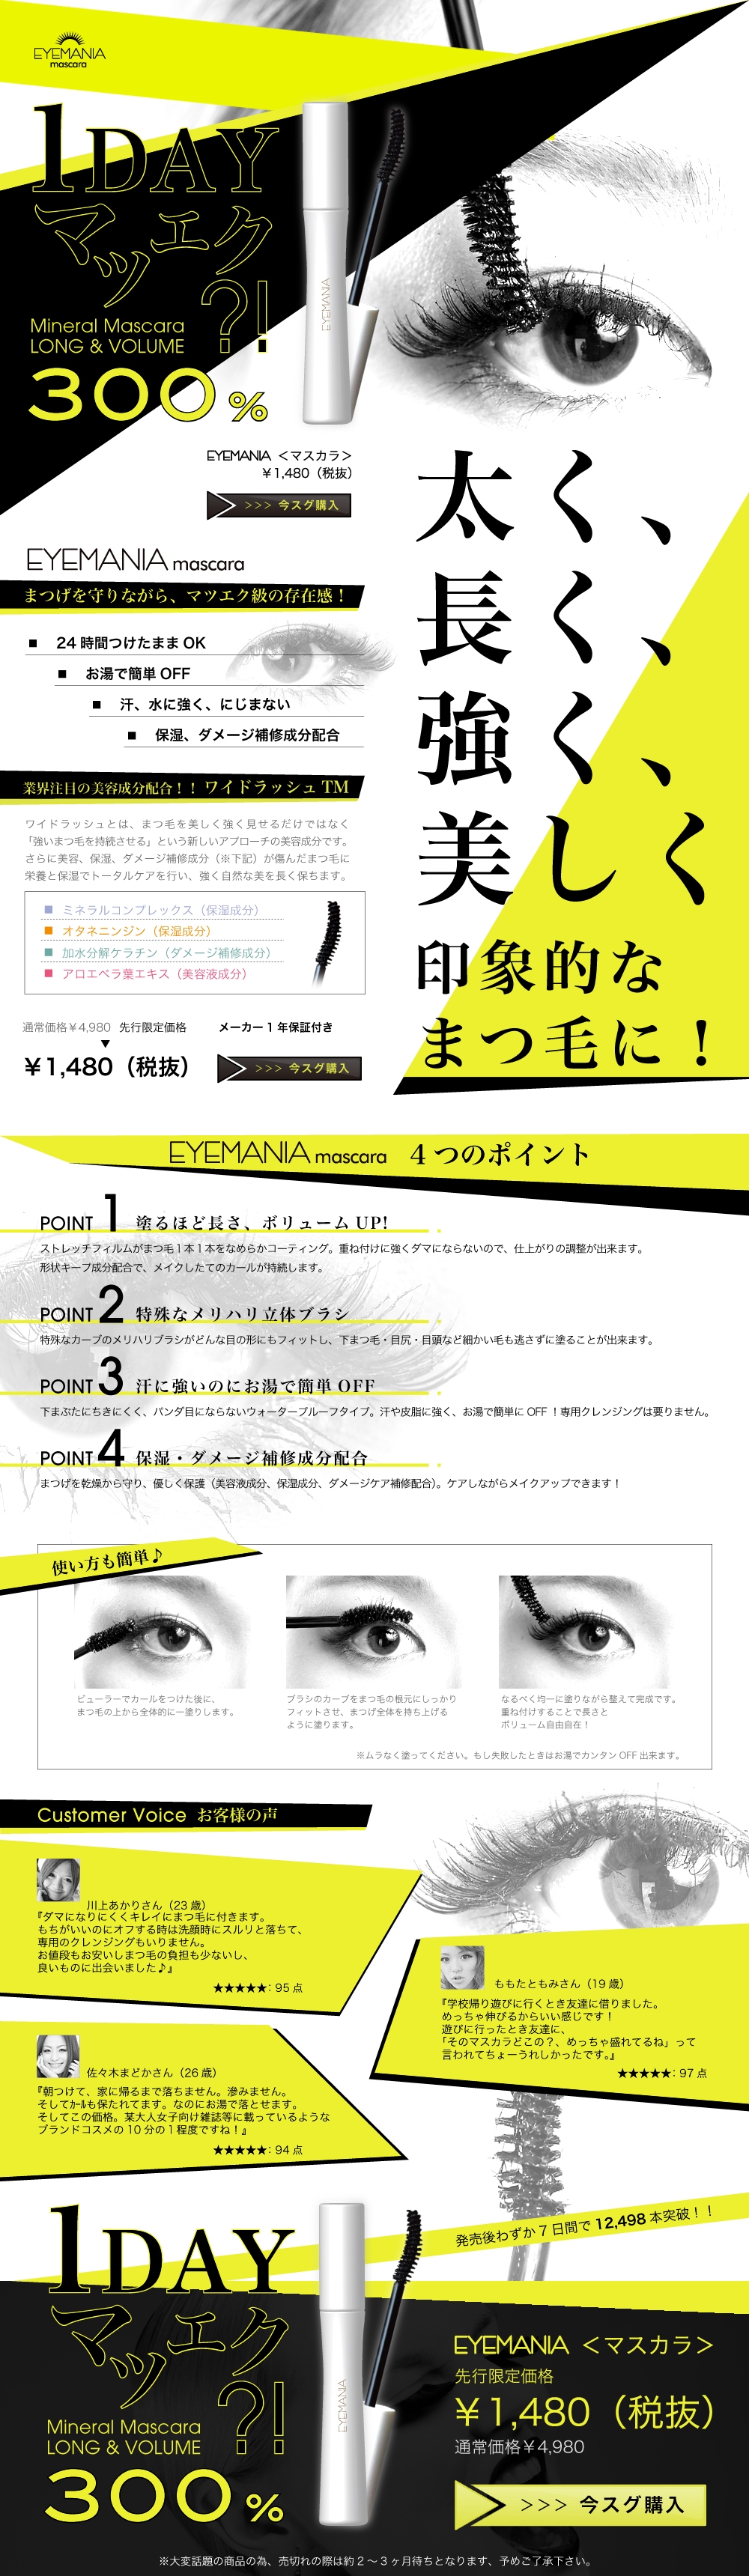 eyemania02.jpg